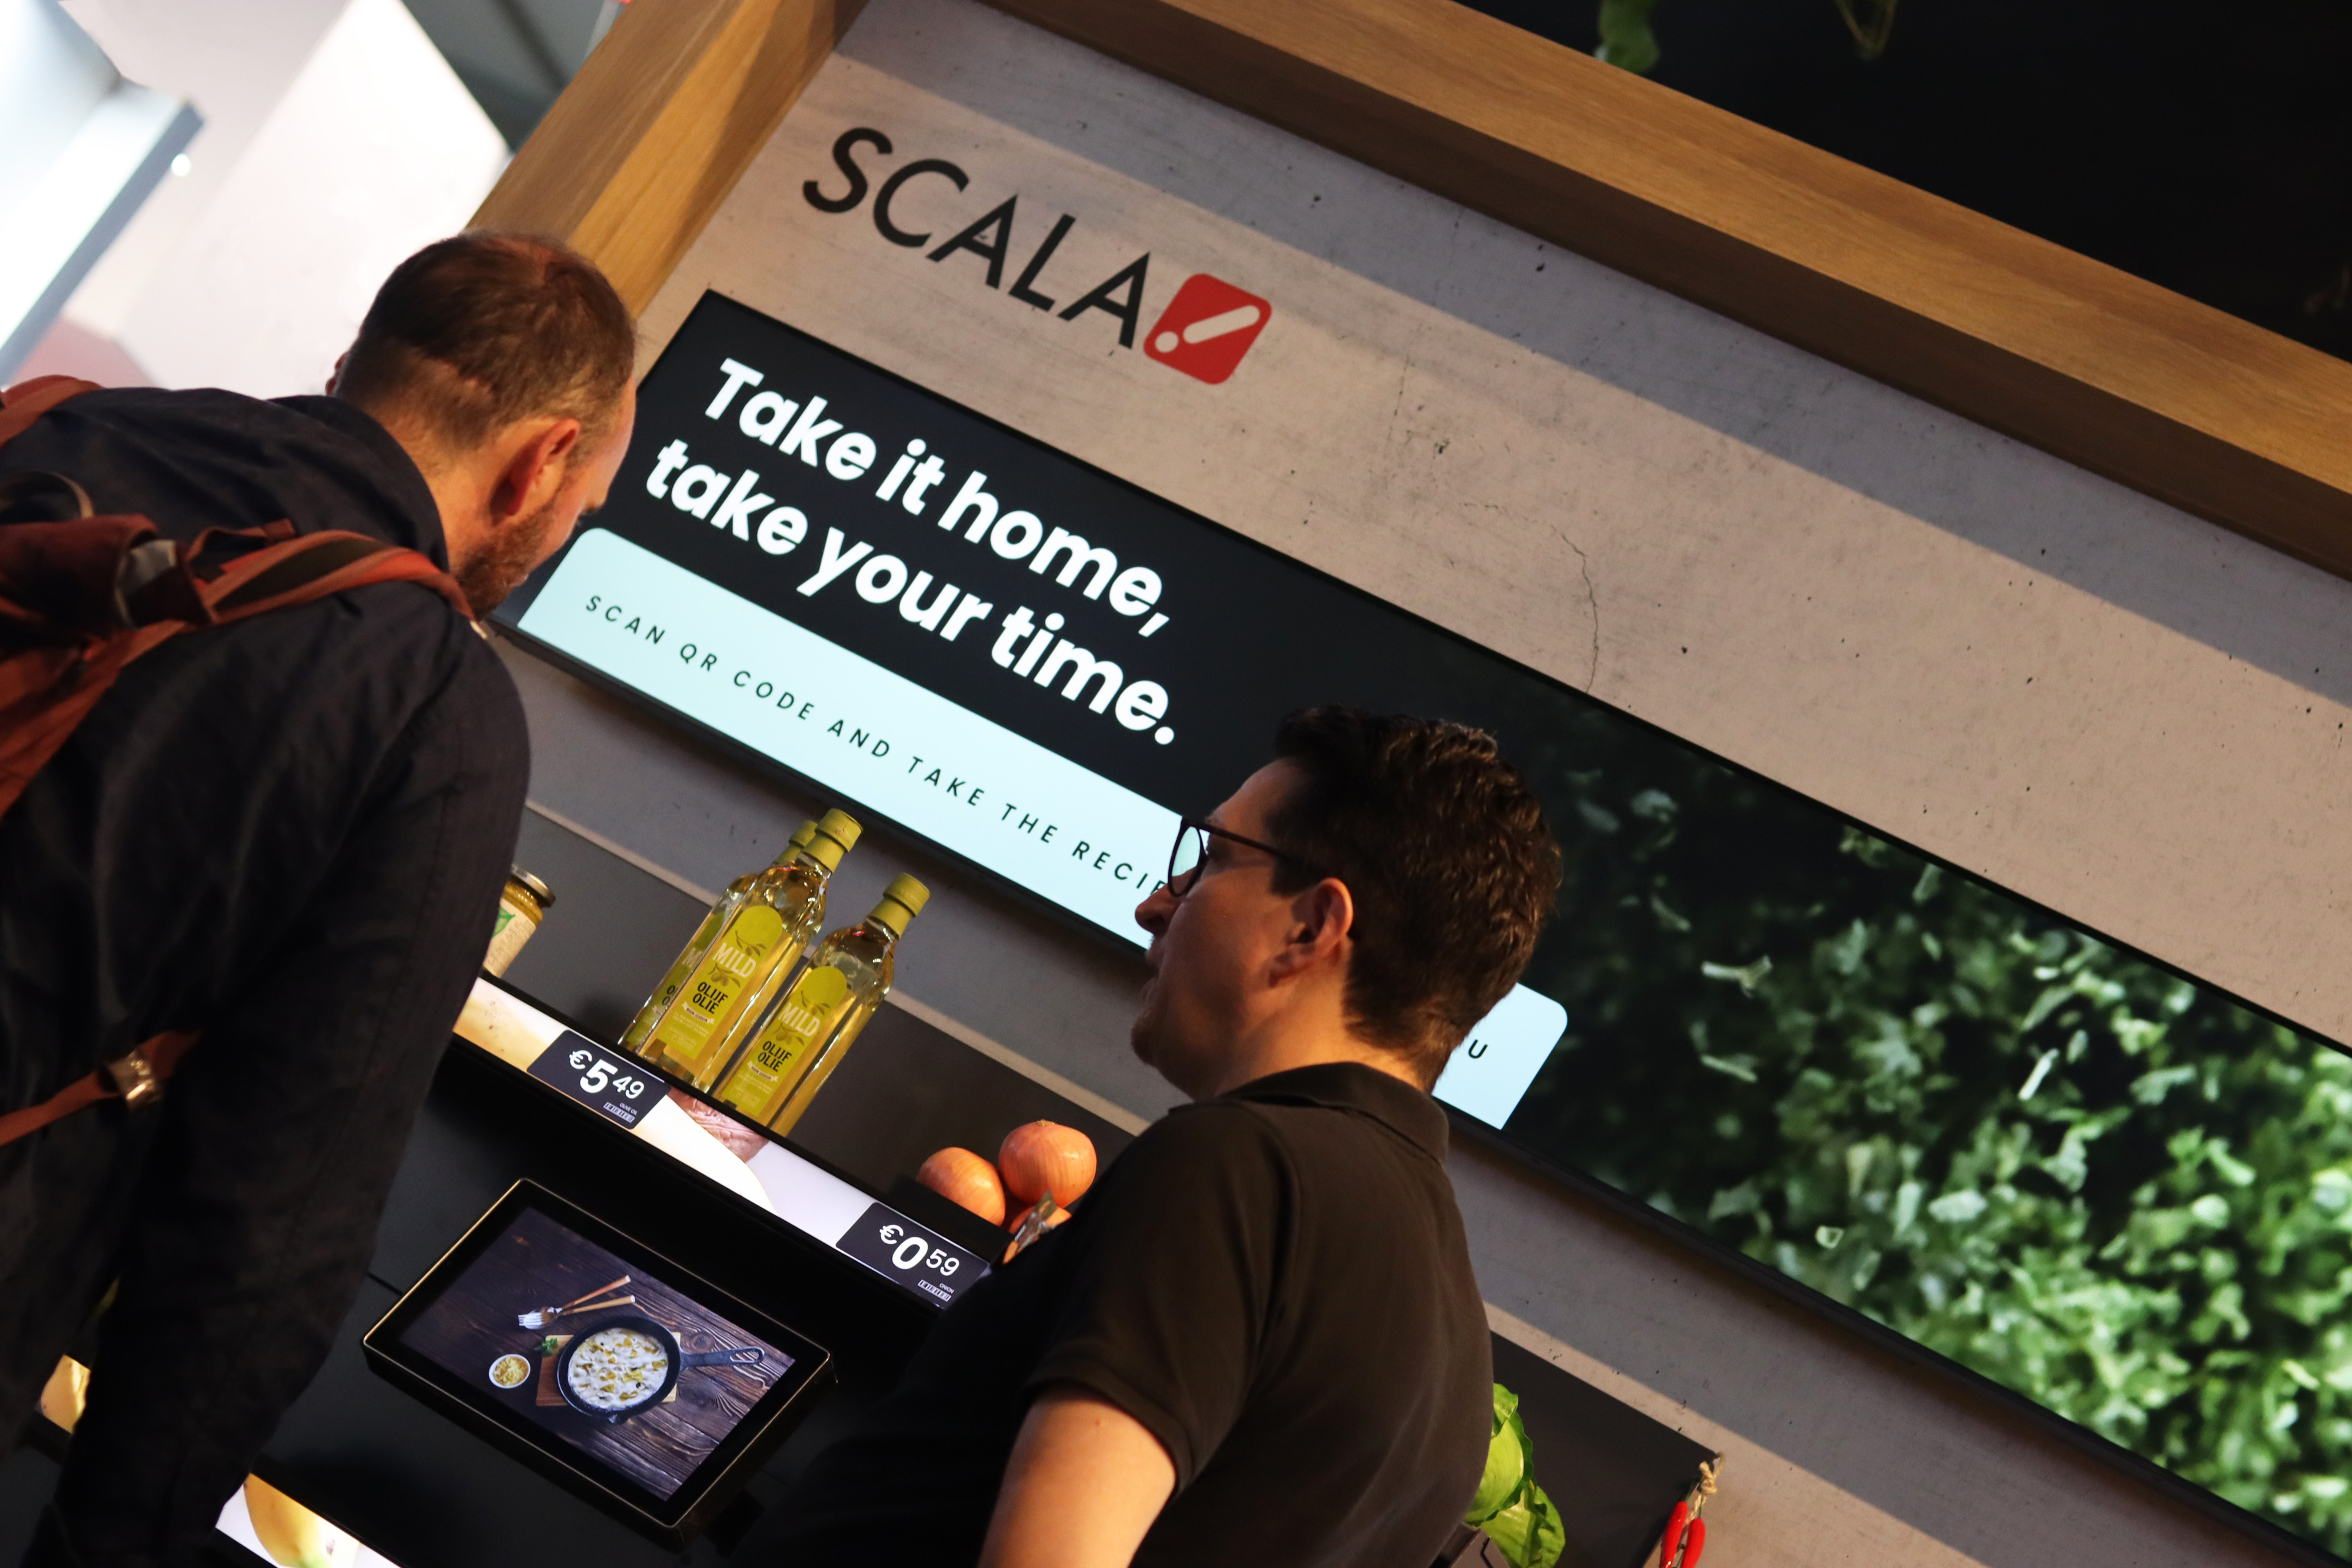 Scala marketing technology digital screens at ISE 2019